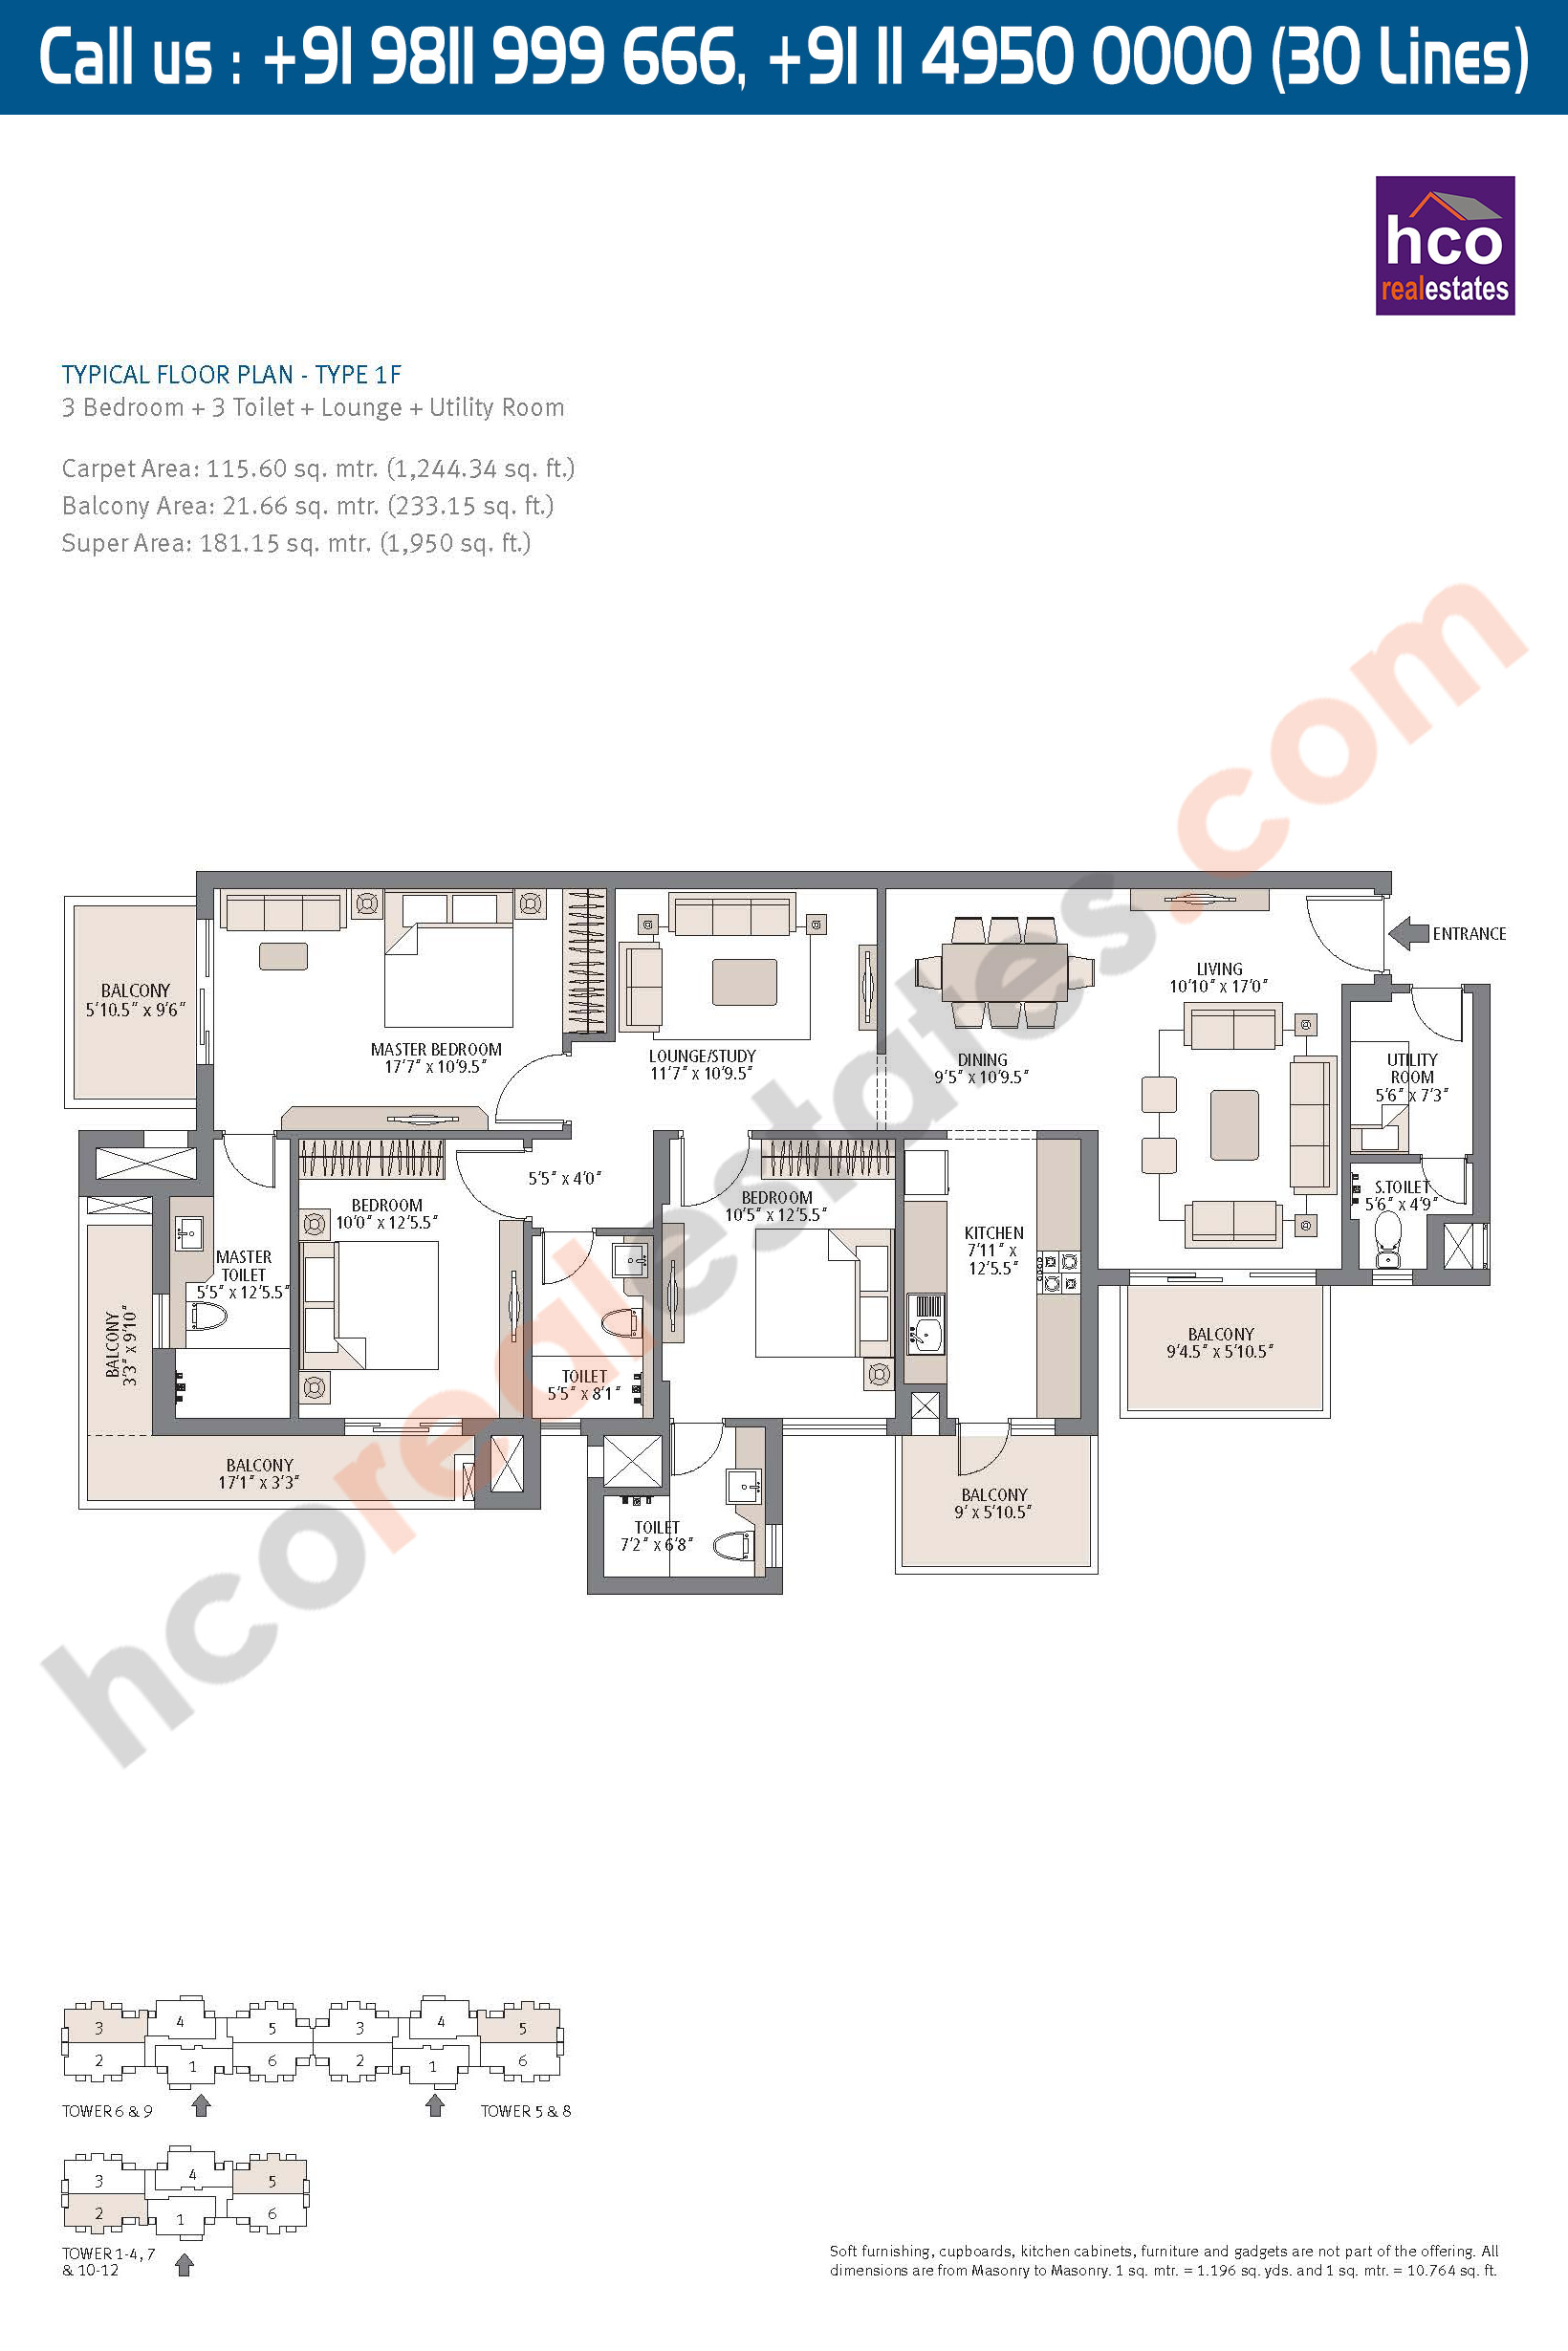 Type - 1F, Typical Floor Plan, Carpet Area : 1244 Sq. Ft